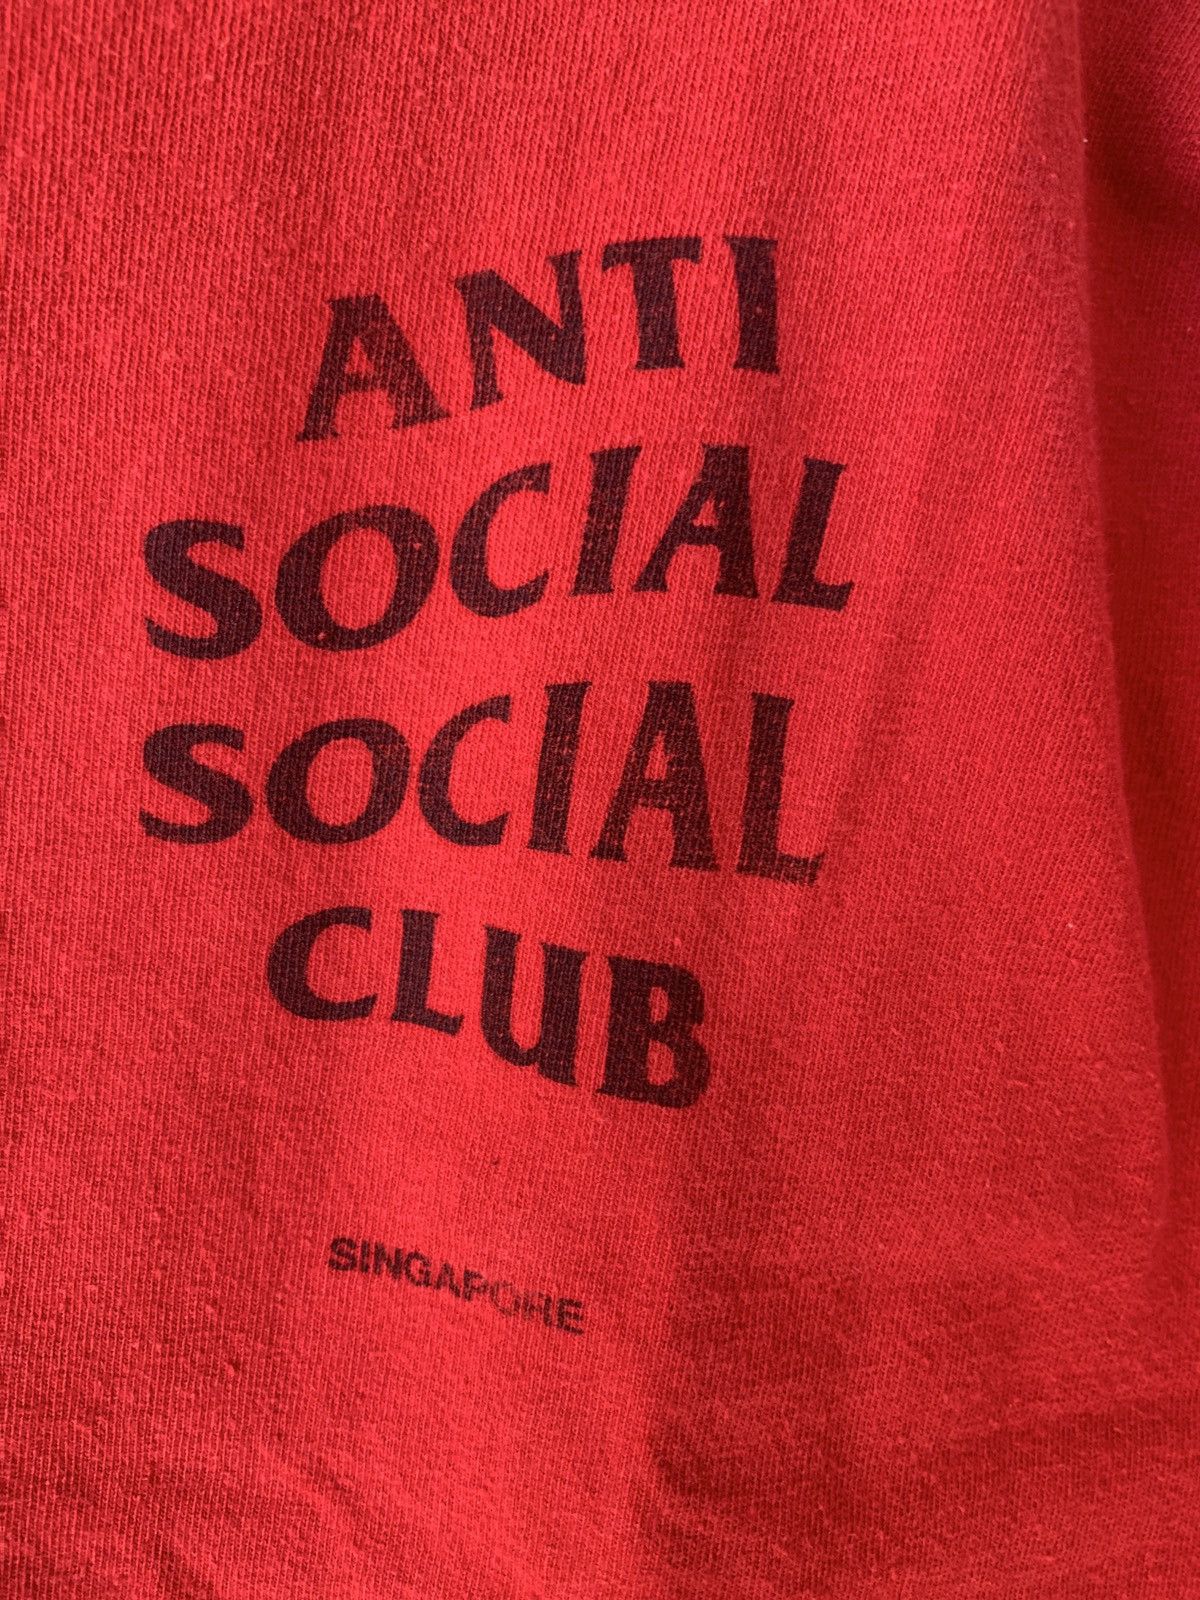 Anti Social Social Club small assc red singapore t shirt Size US M / EU 48-50 / 2 - 4 Preview